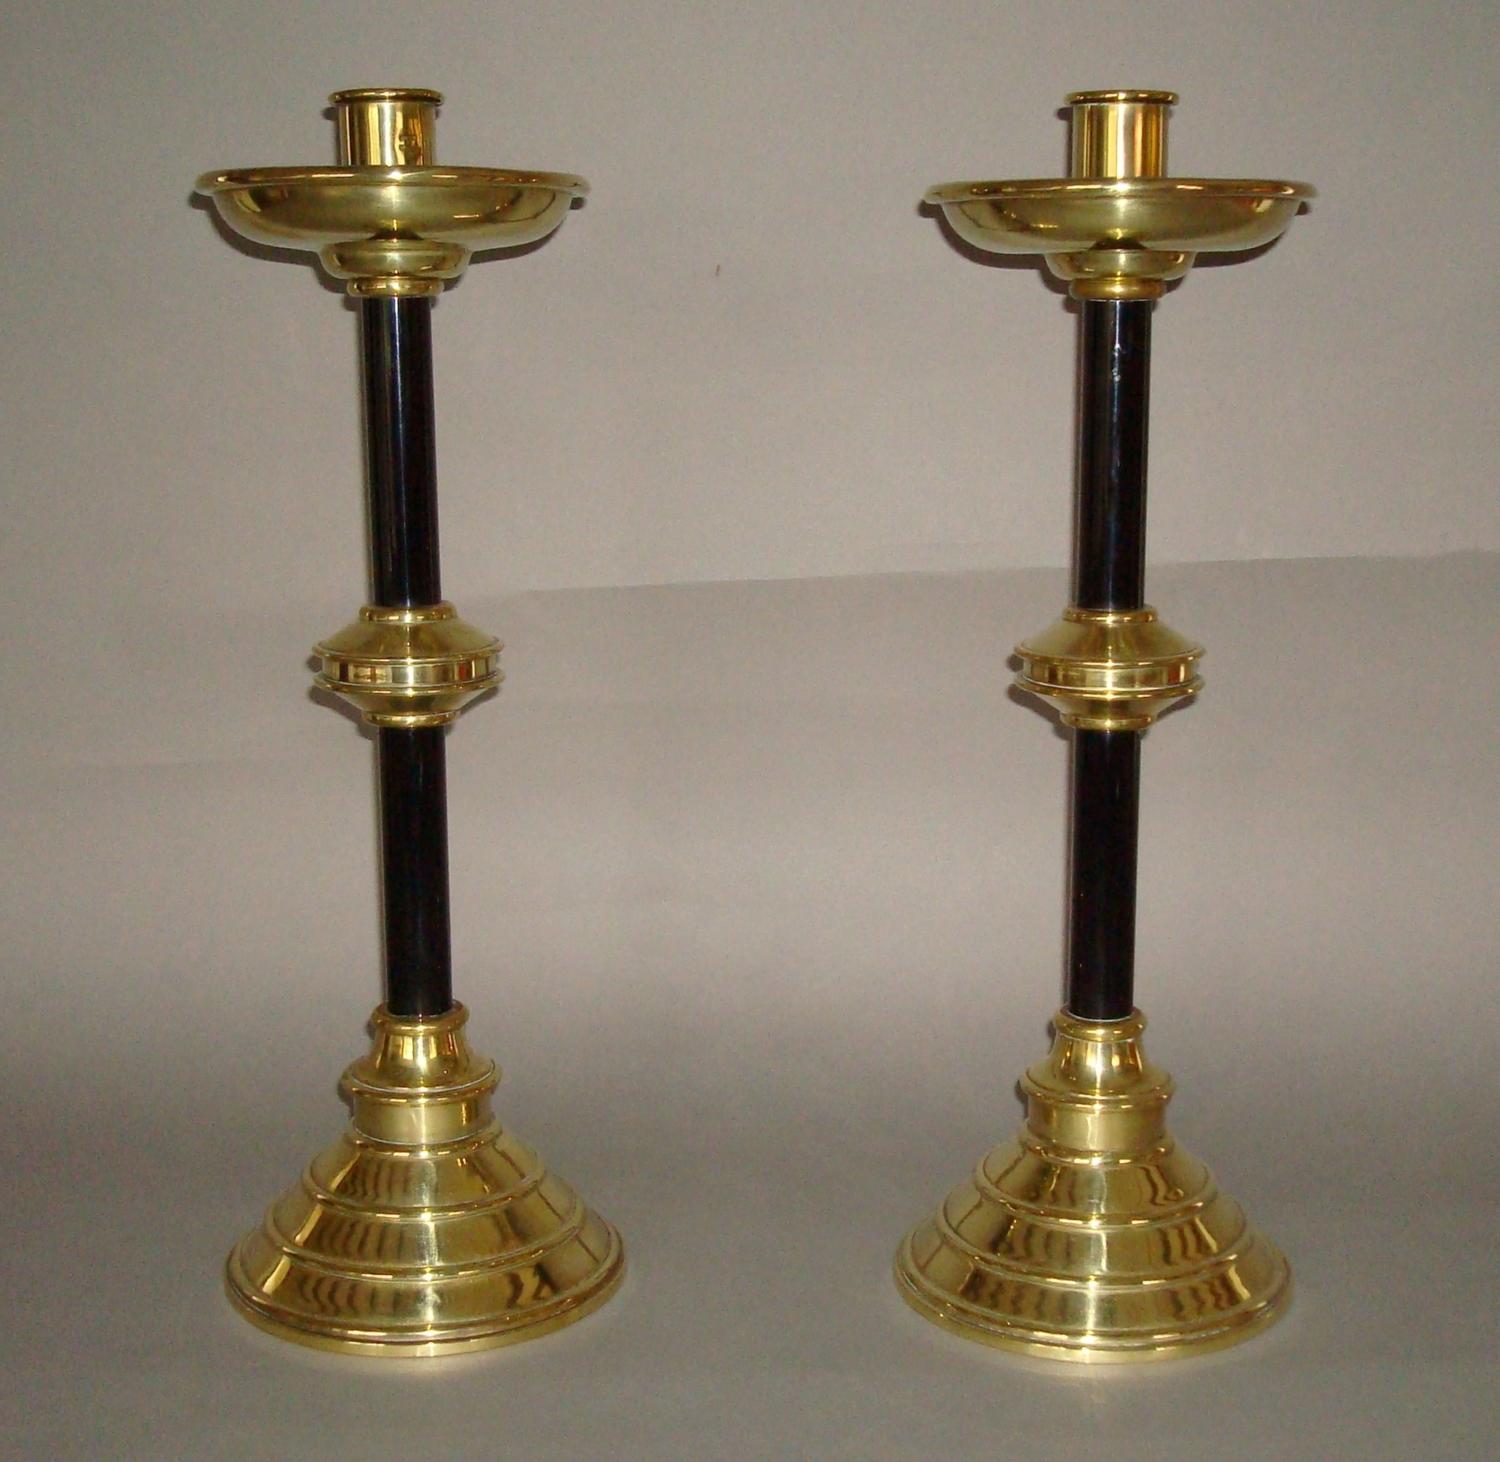 C19th pair of candlesticks